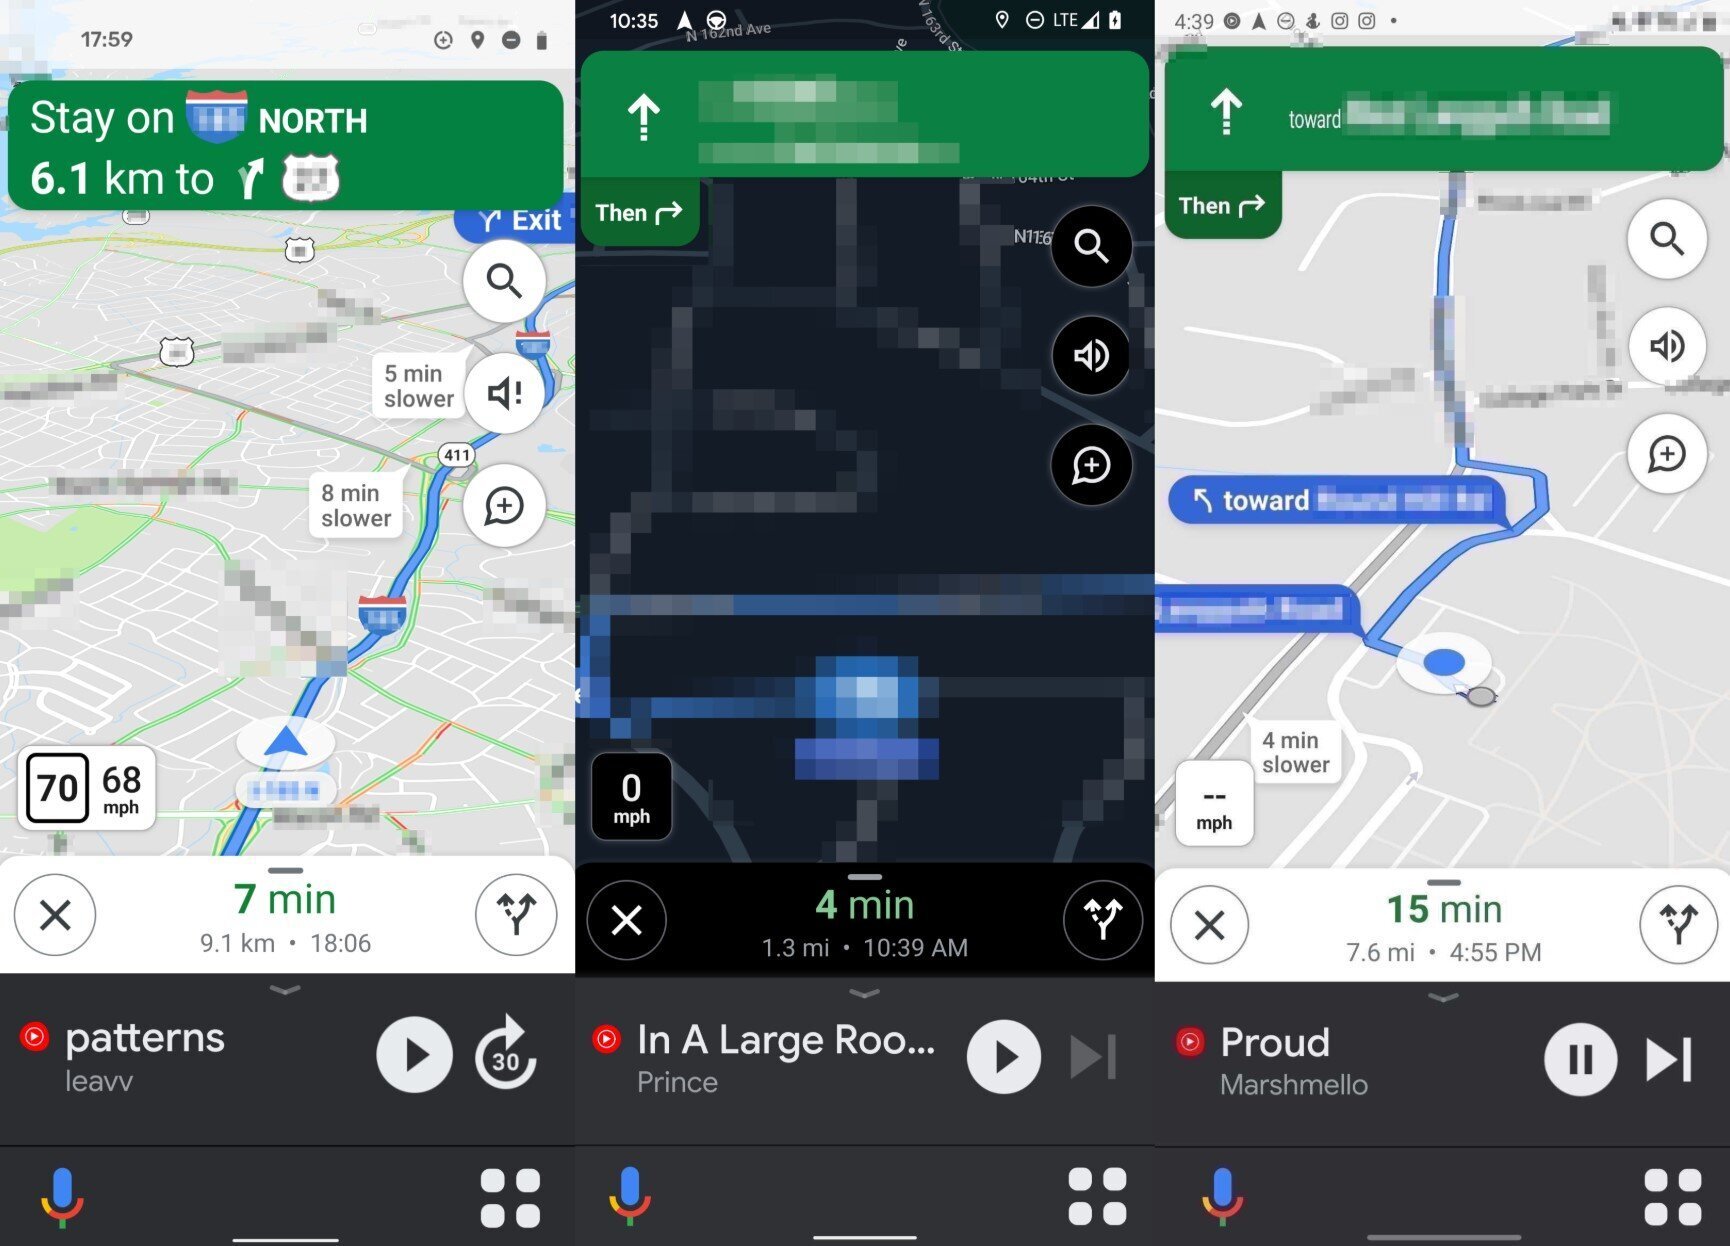 More information about "Τα Google Maps αναβαθμίζονται και φέρνουν λειτουργίες ειδικά για την οδήγηση"